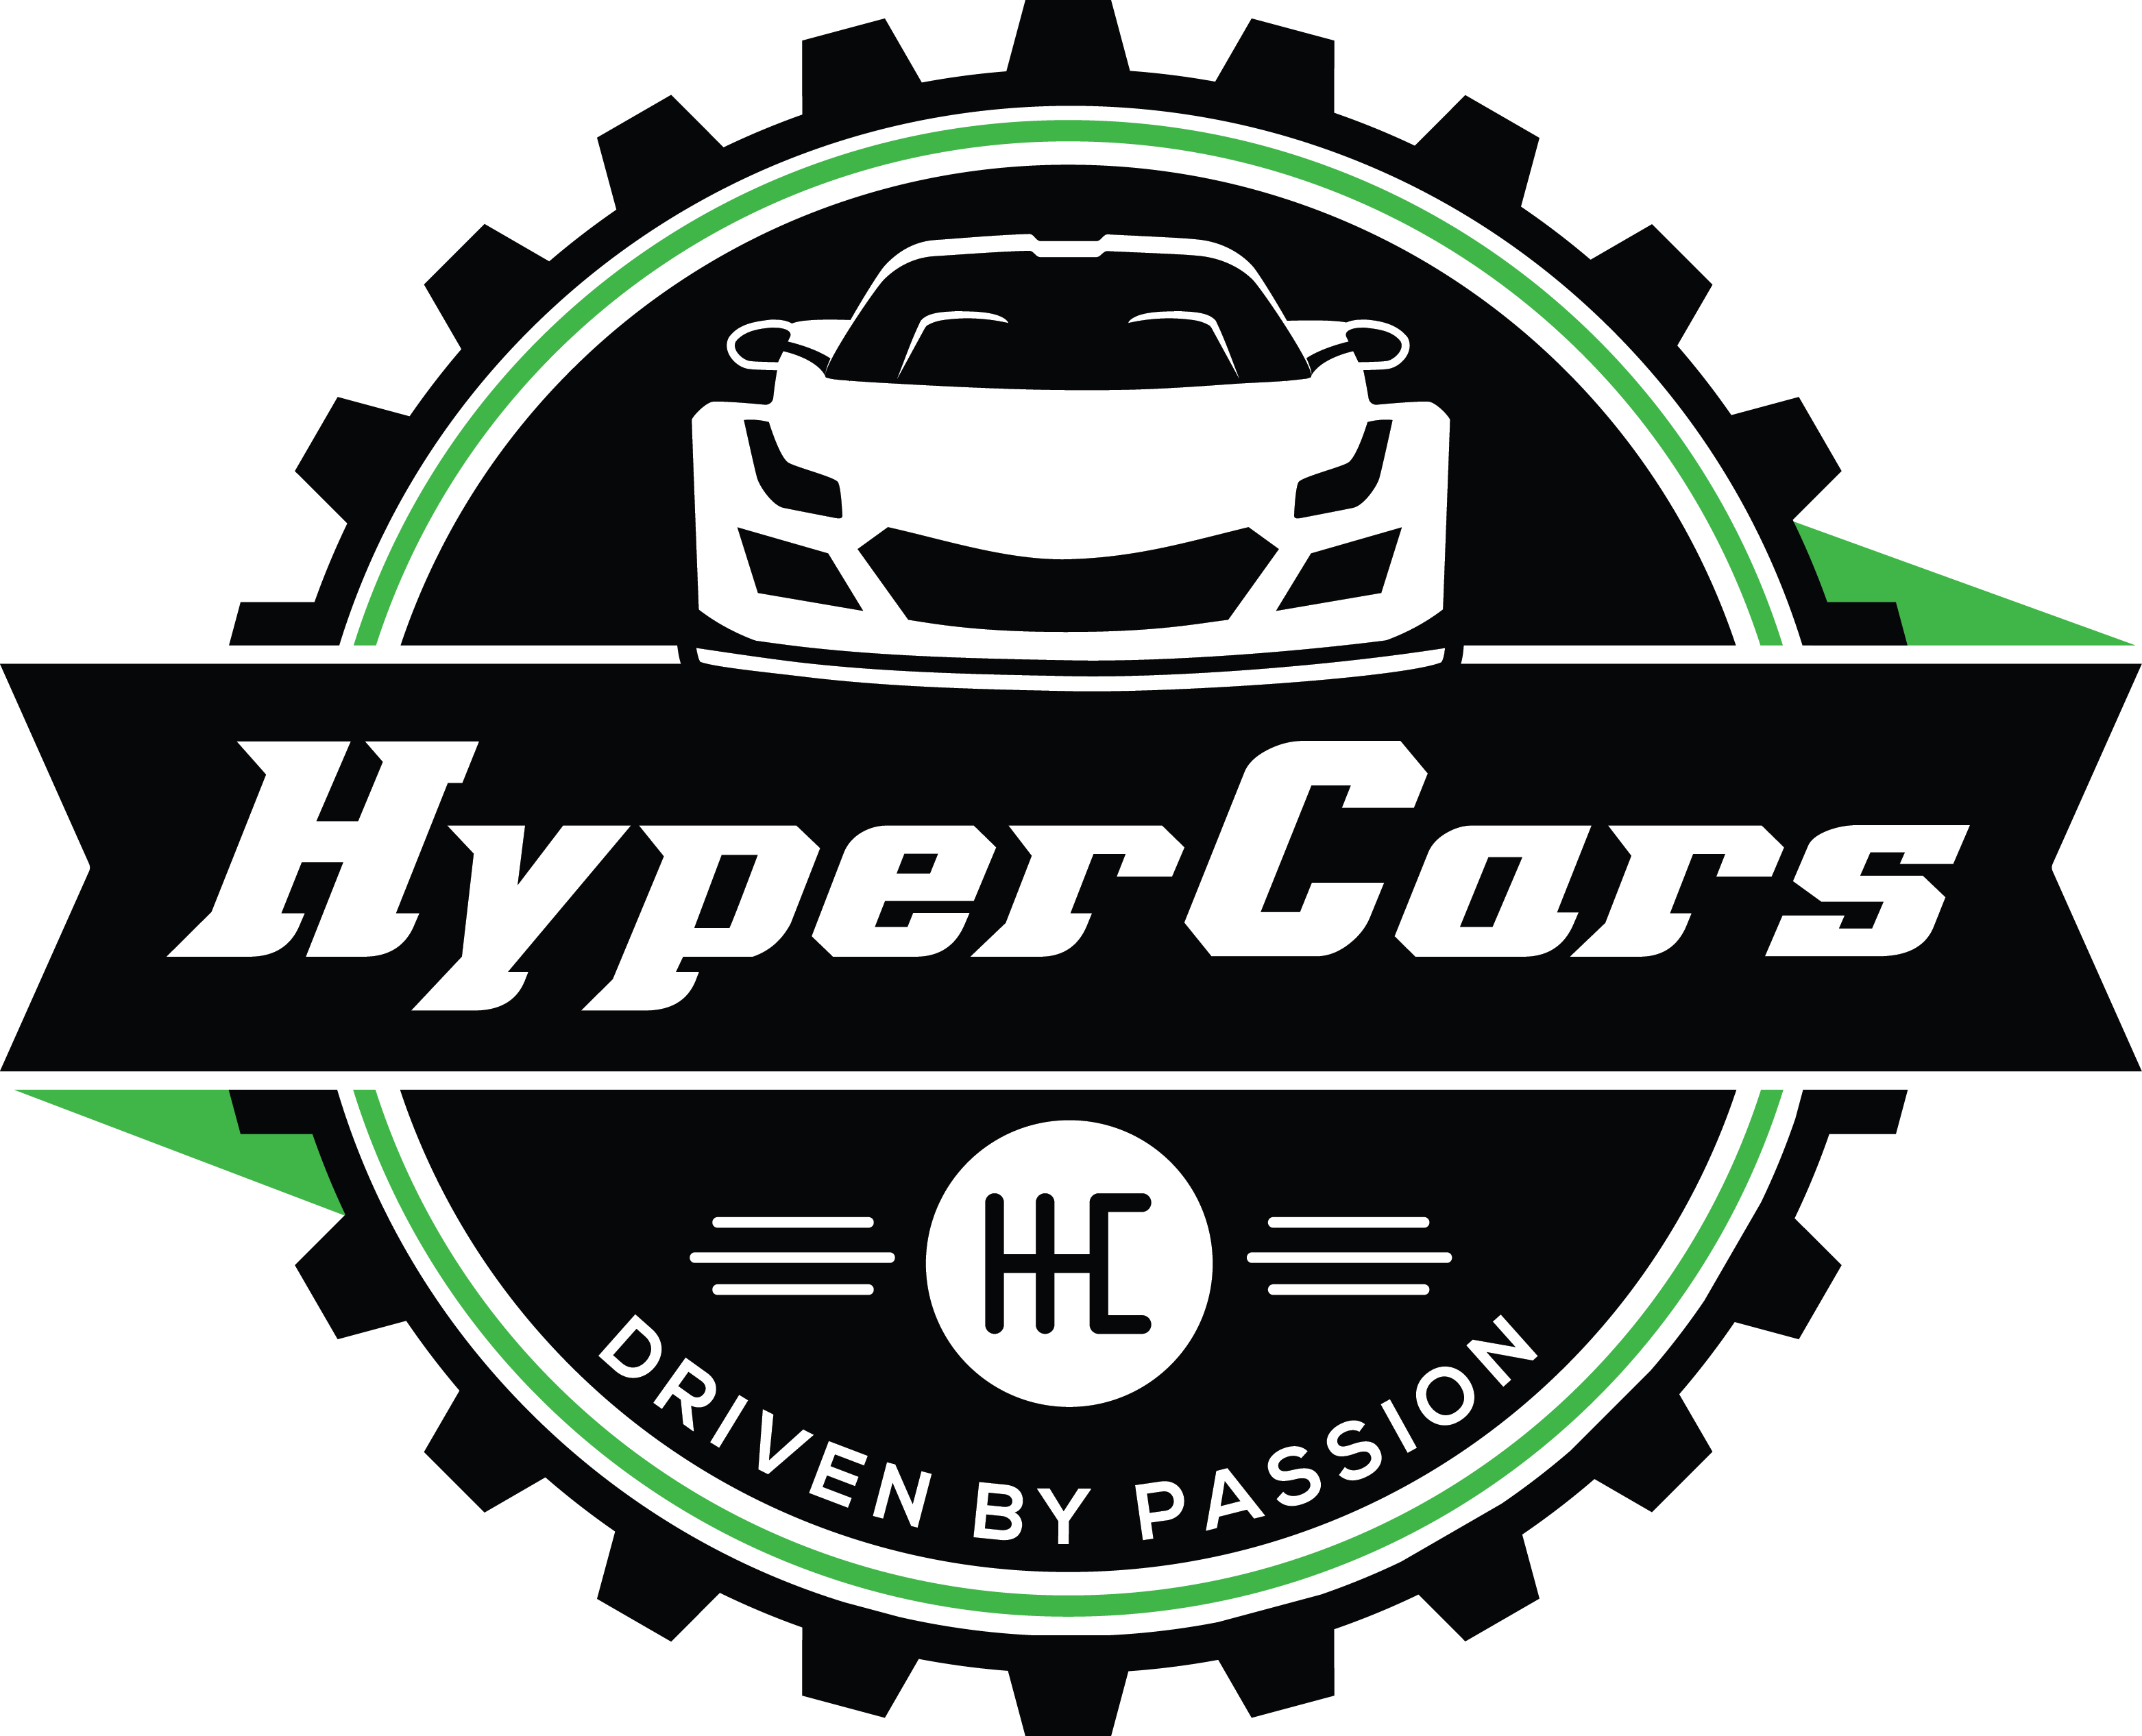 HyperCars Logo